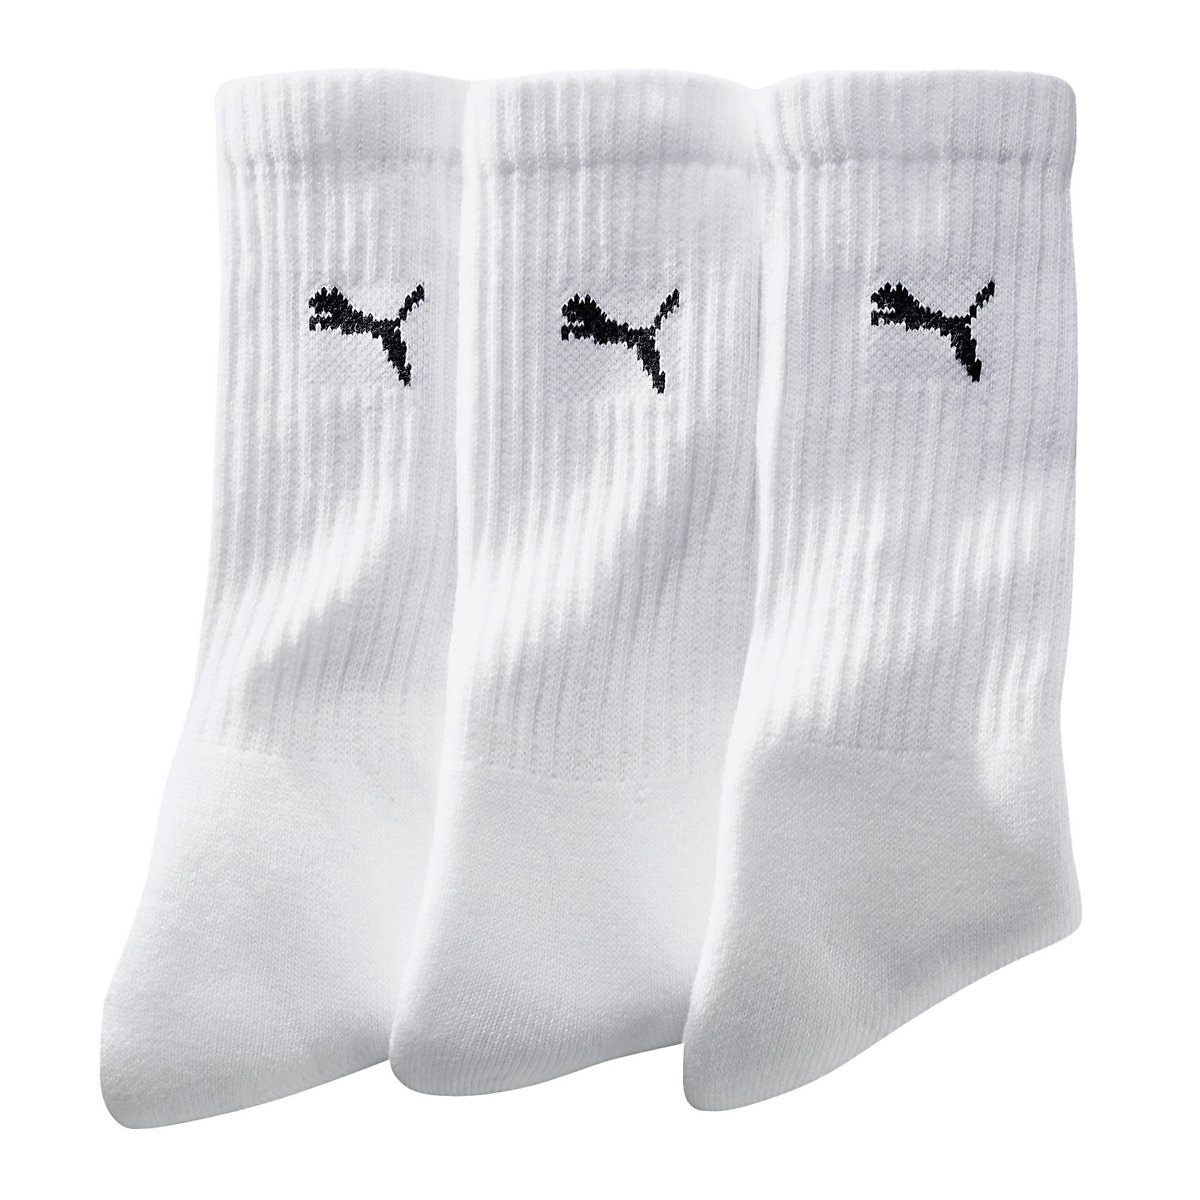 Pack of 3 pairs of tennis socks Puma | La Redoute